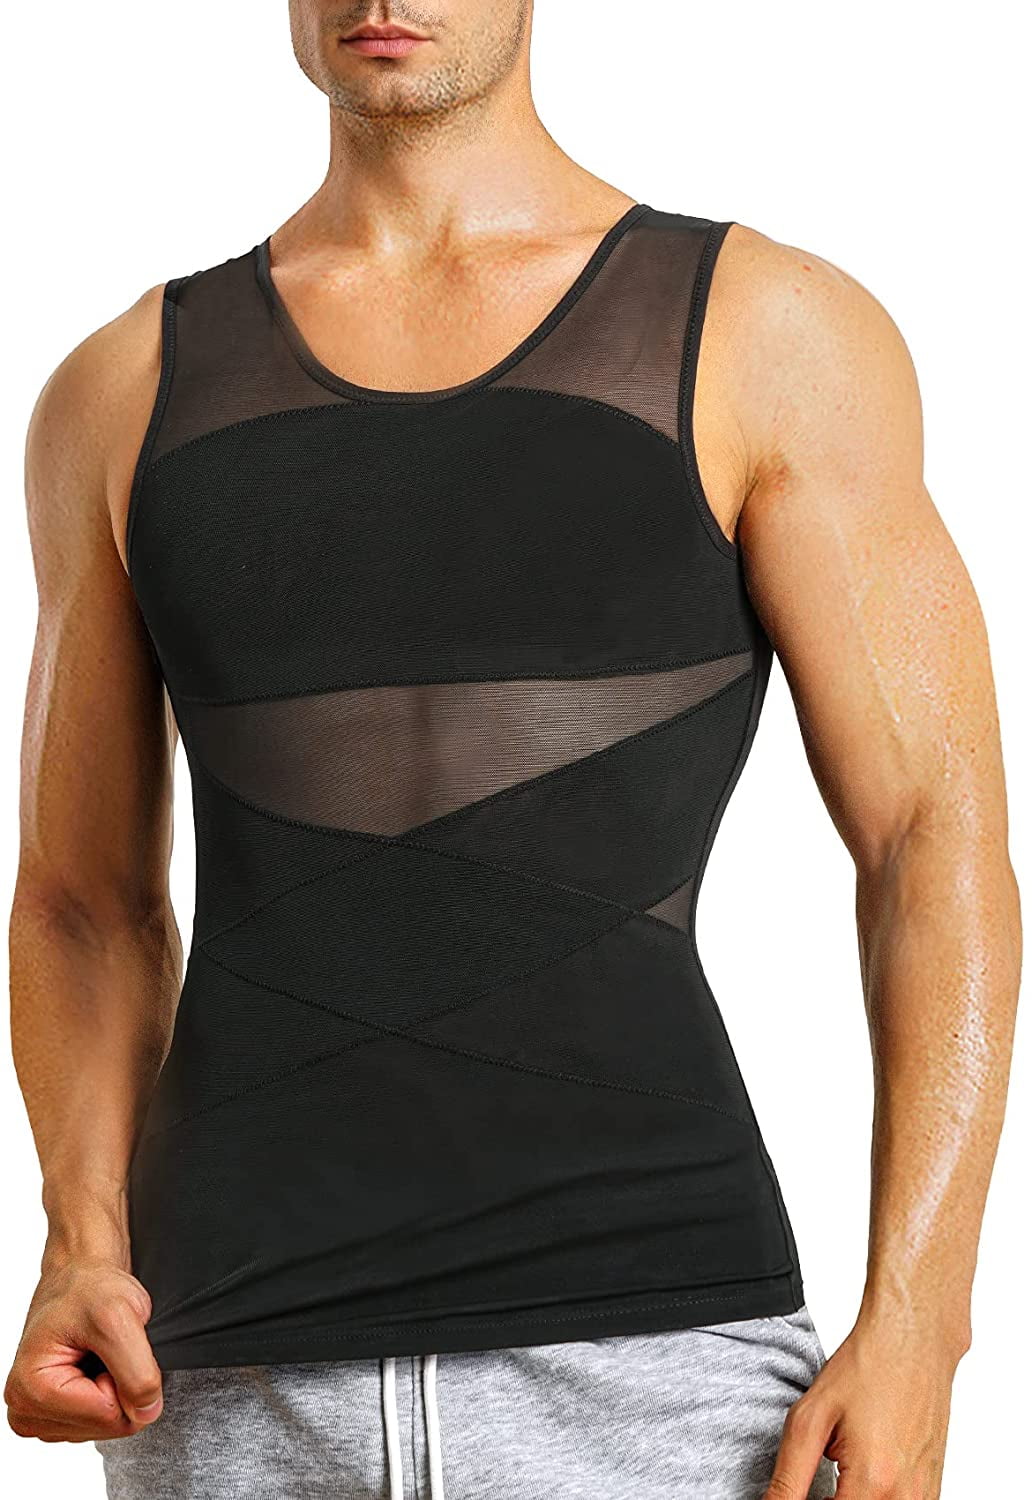 Slimming Compression Flat Chest Abdominal Shaper Firm Support Vest Shirt for Men